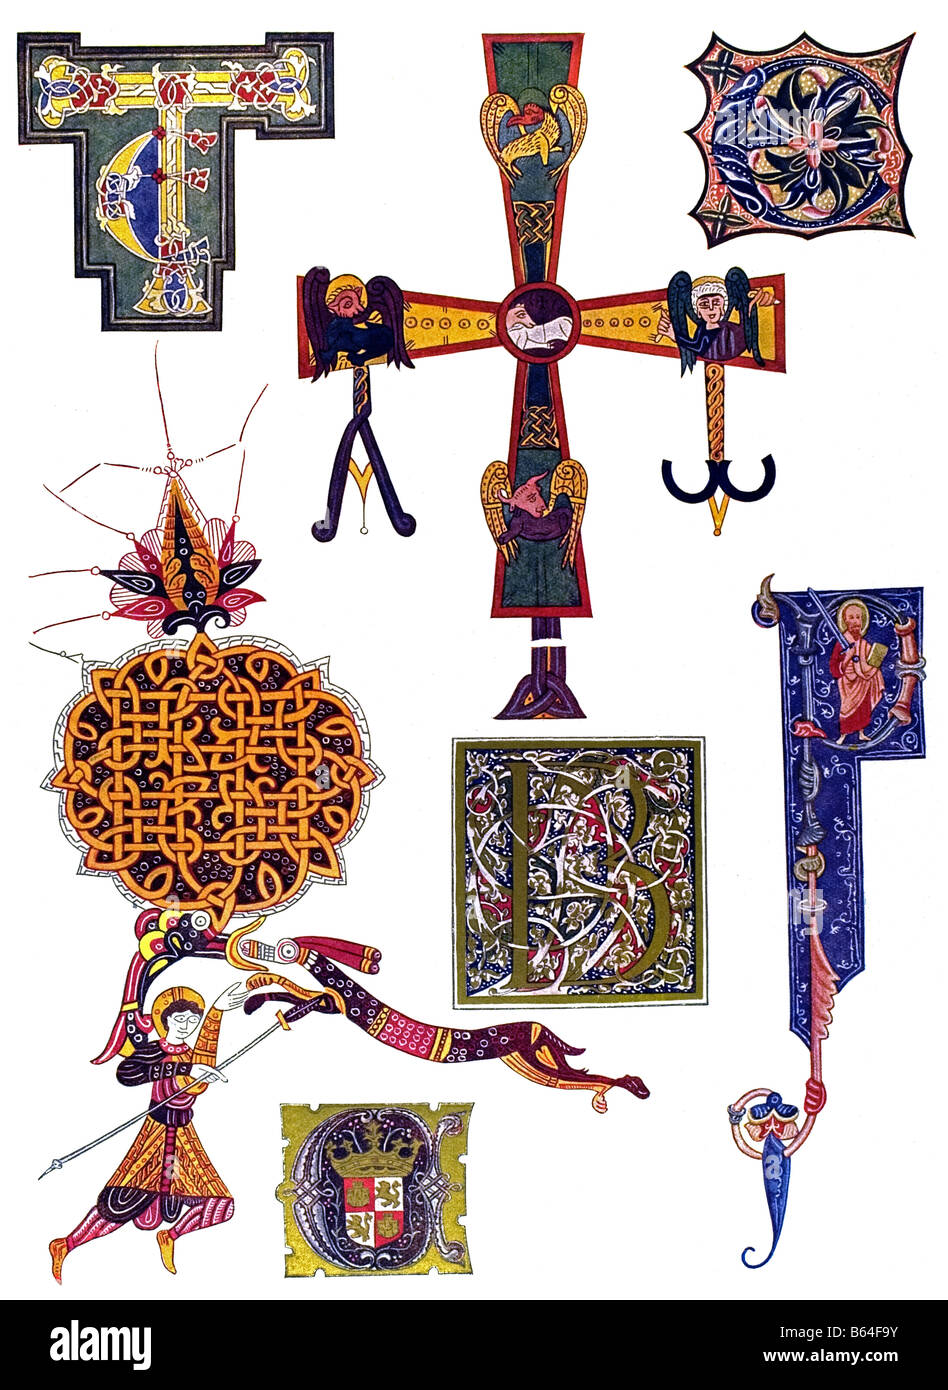 Mediaeval Ornament in Spain, Illuminations in different eras. Stock Photo